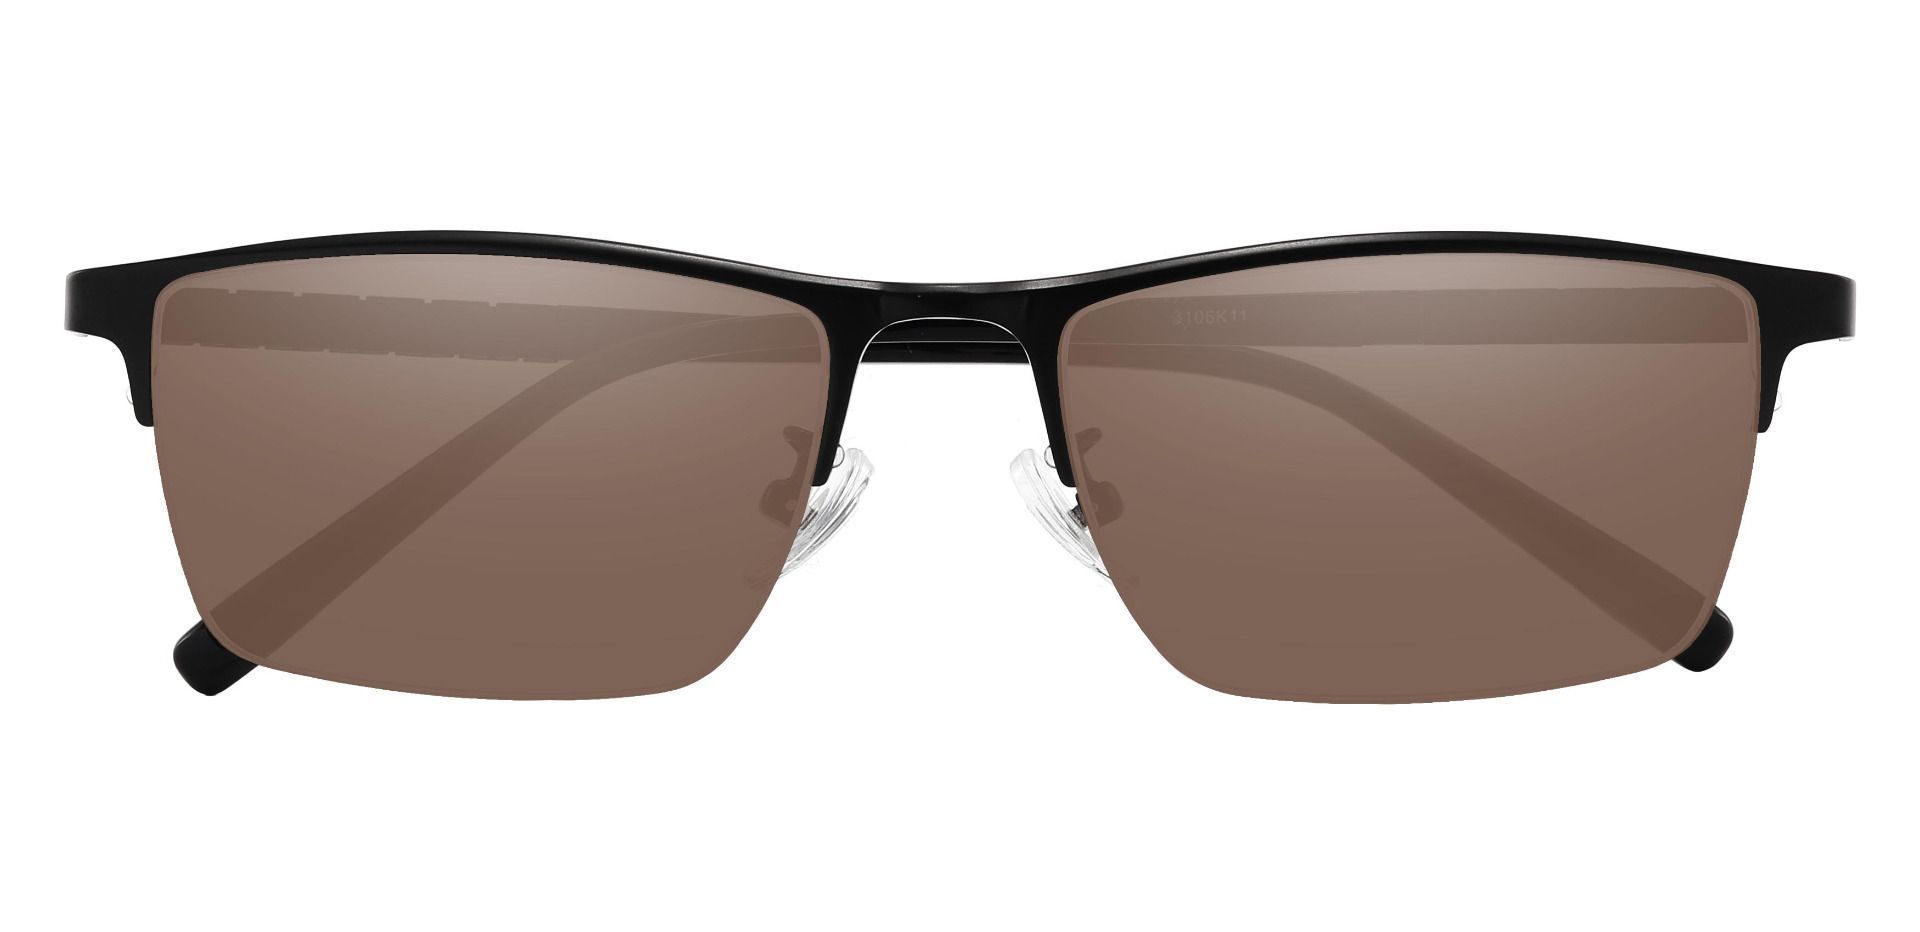 Maine Rectangle Prescription Sunglasses - Black Frame With Brown Lenses